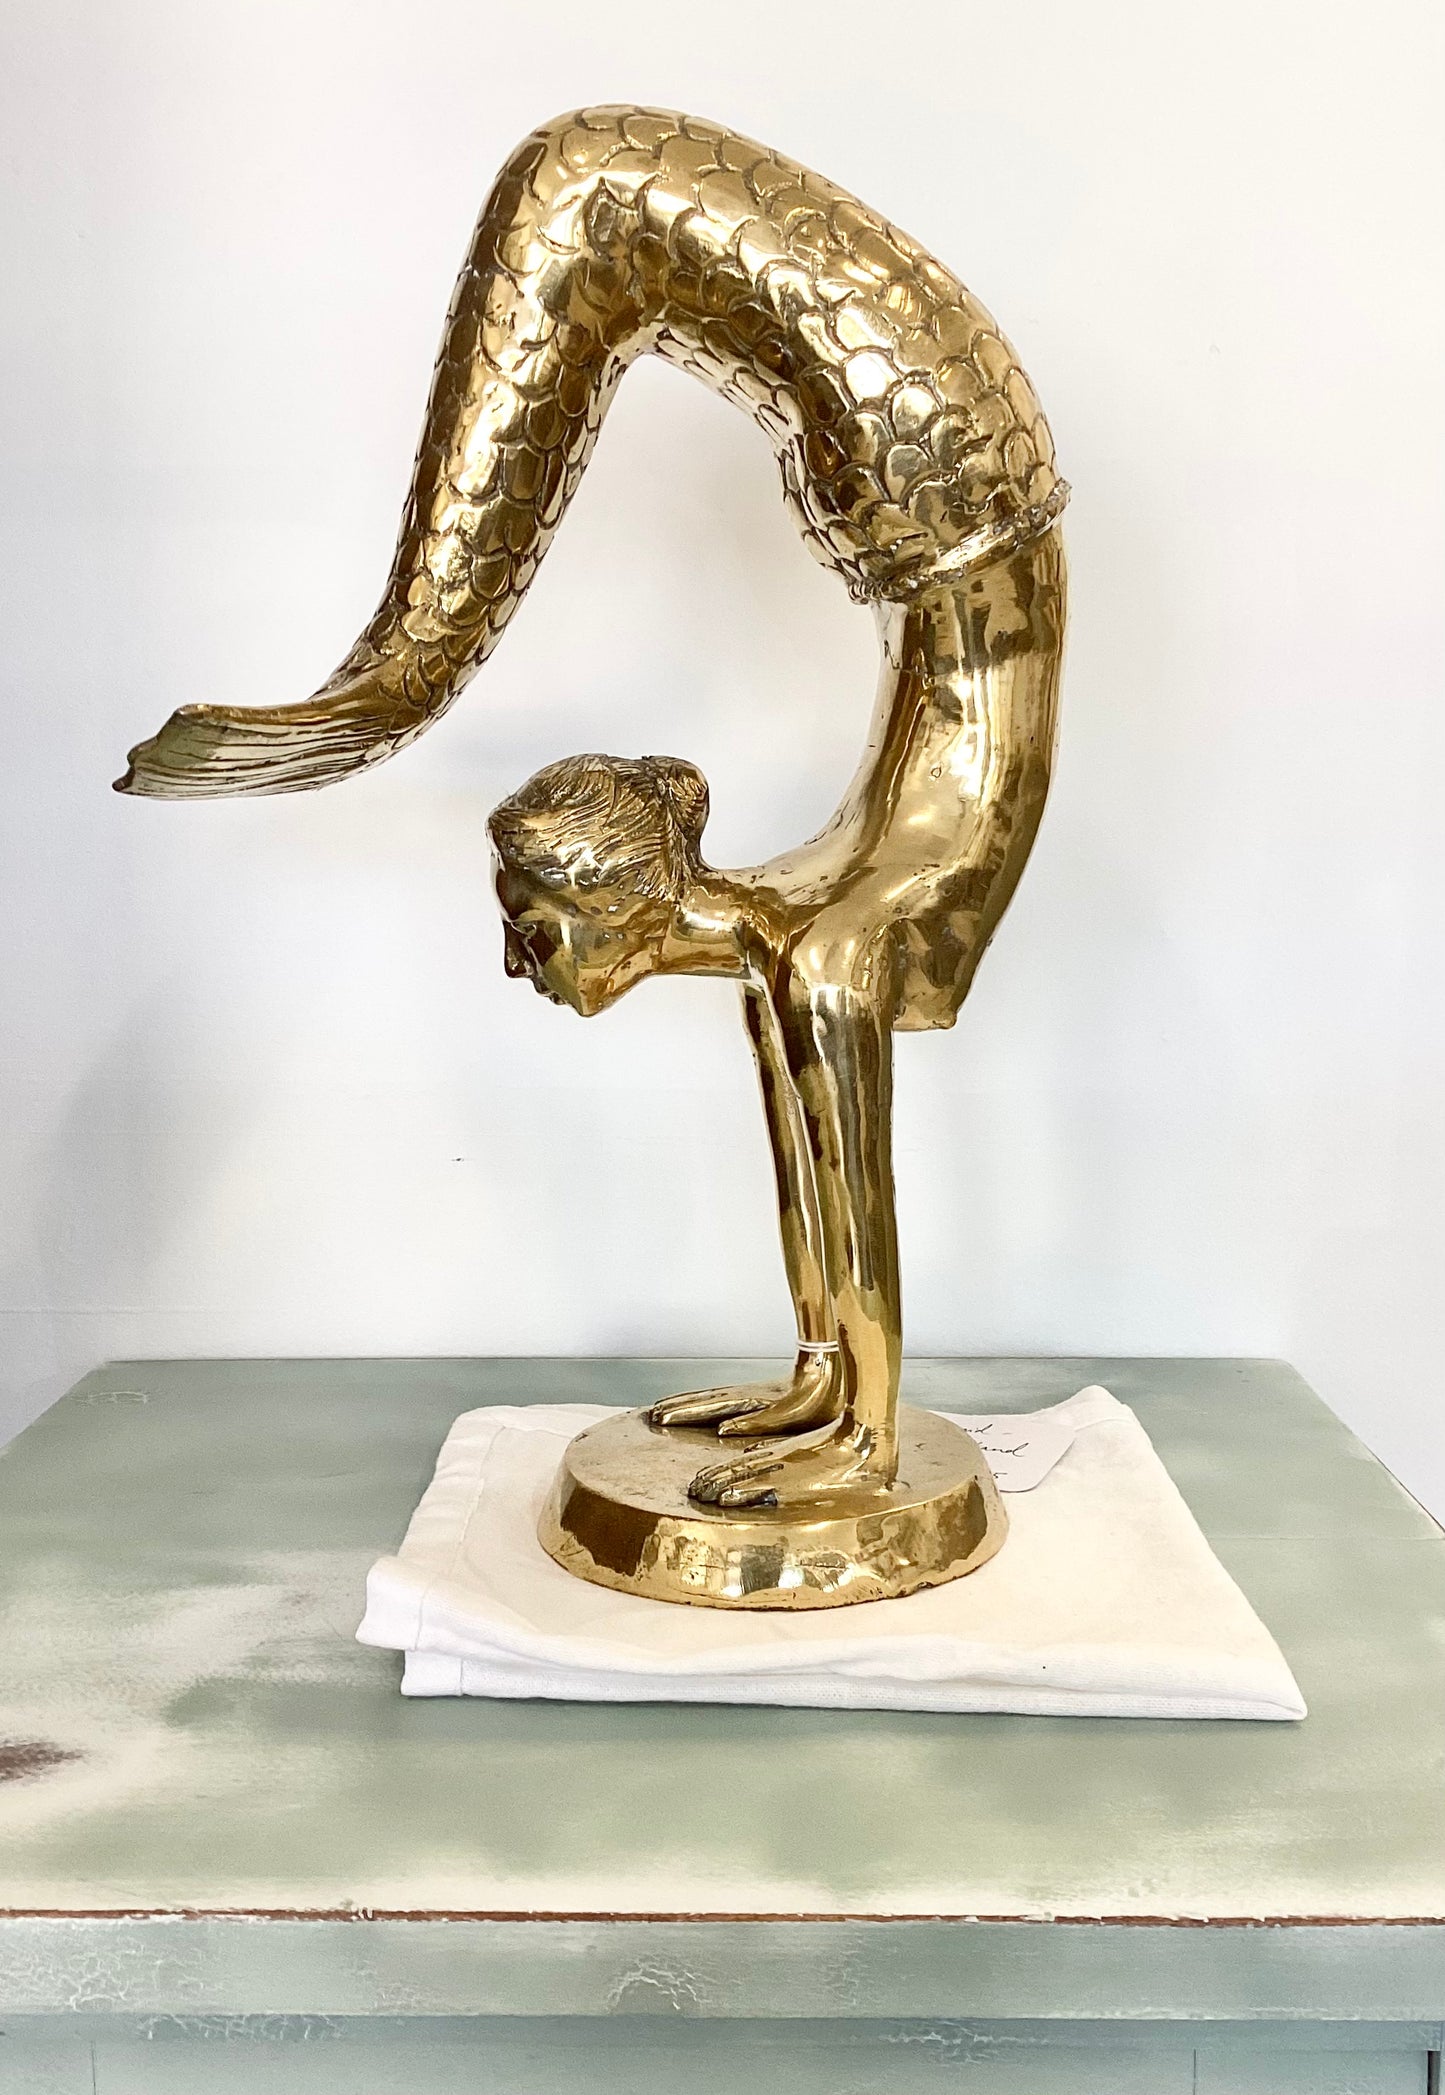 Handstand Mermaid - vintage gold